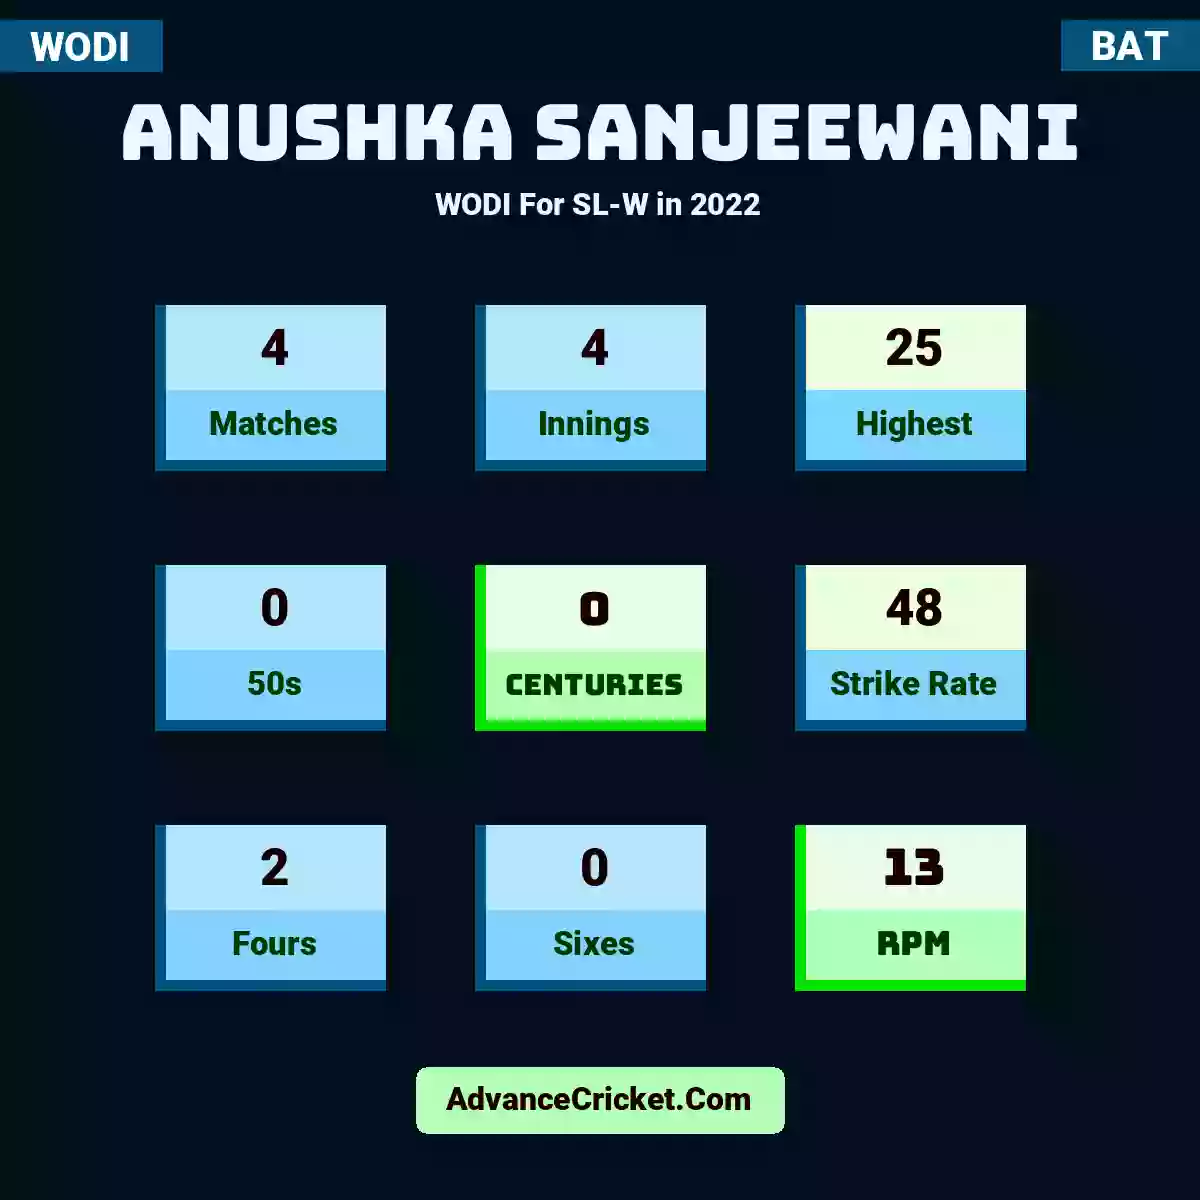 Anushka Sanjeewani WODI  For SL-W in 2022, Anushka Sanjeewani played 4 matches, scored 25 runs as highest, 0 half-centuries, and 0 centuries, with a strike rate of 48. A.Sanjeewani hit 2 fours and 0 sixes, with an RPM of 13.